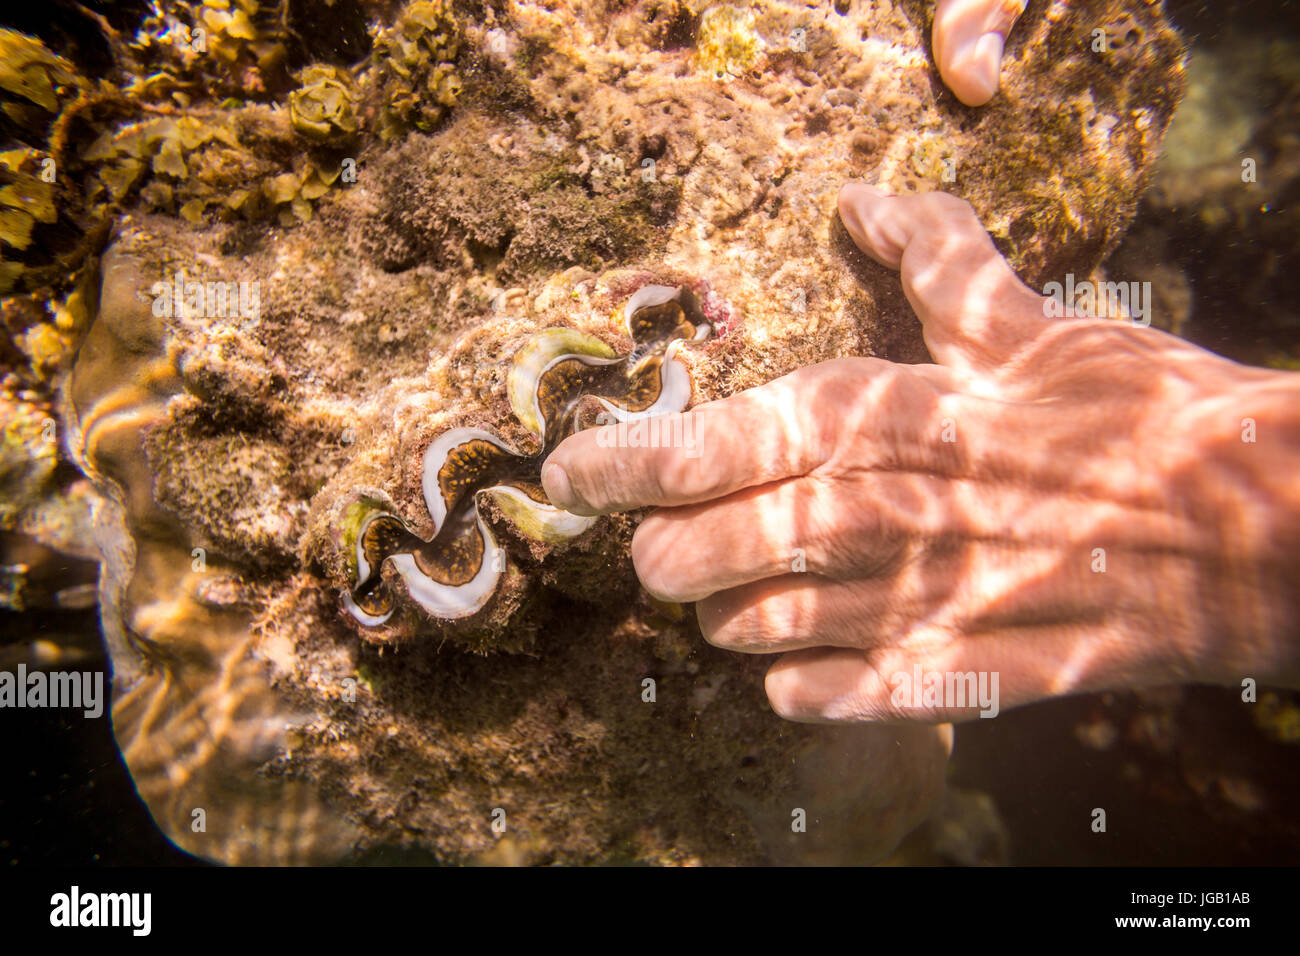 Tourist touching underwater shell of mollusk, Kenya, East Africa Stock Photo